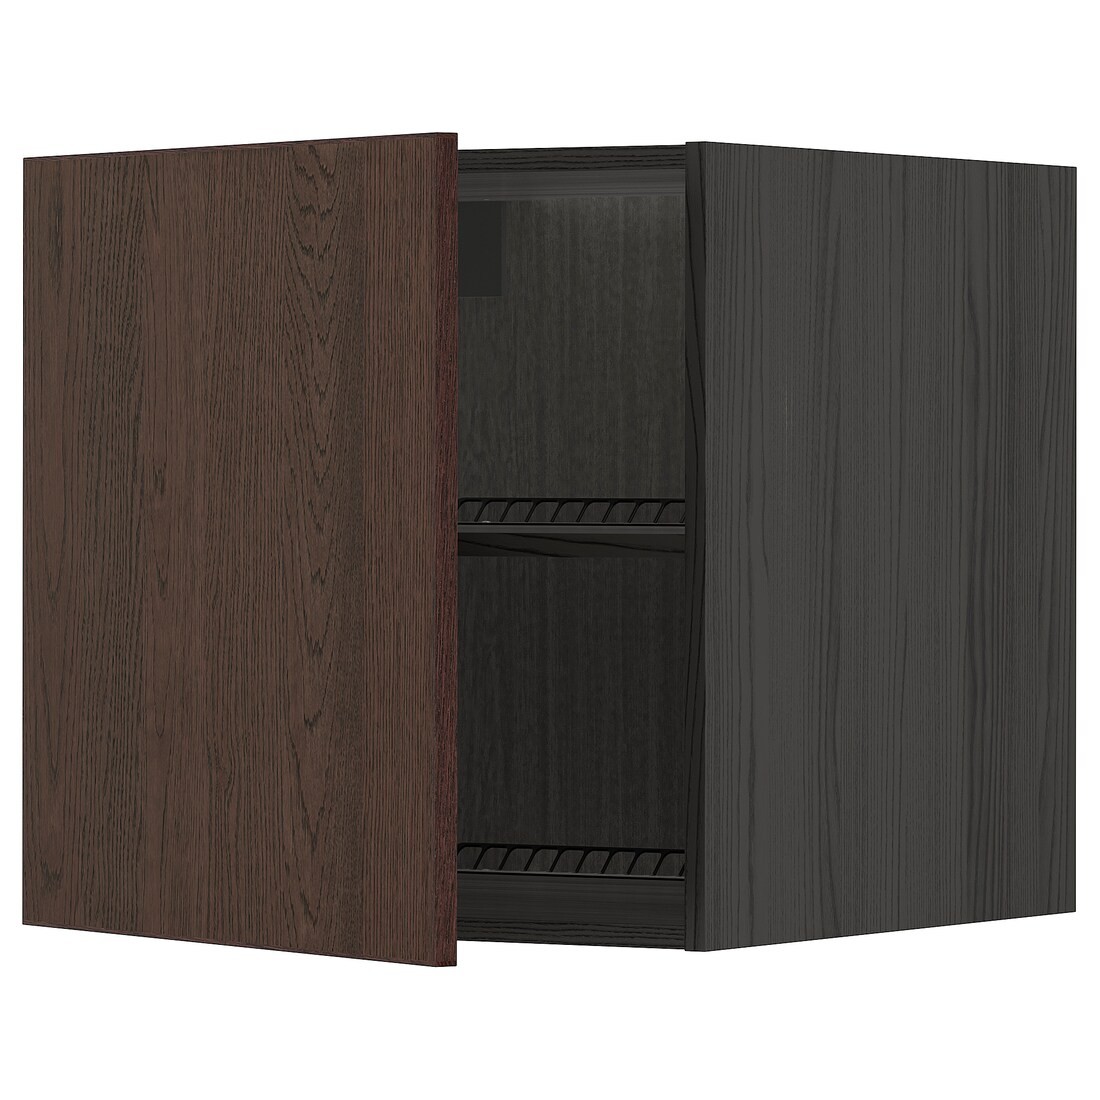 METOD МЕТОД Верхний шкаф для холодильника / морозильника, черный / Sinarp коричневый, 60x60 см